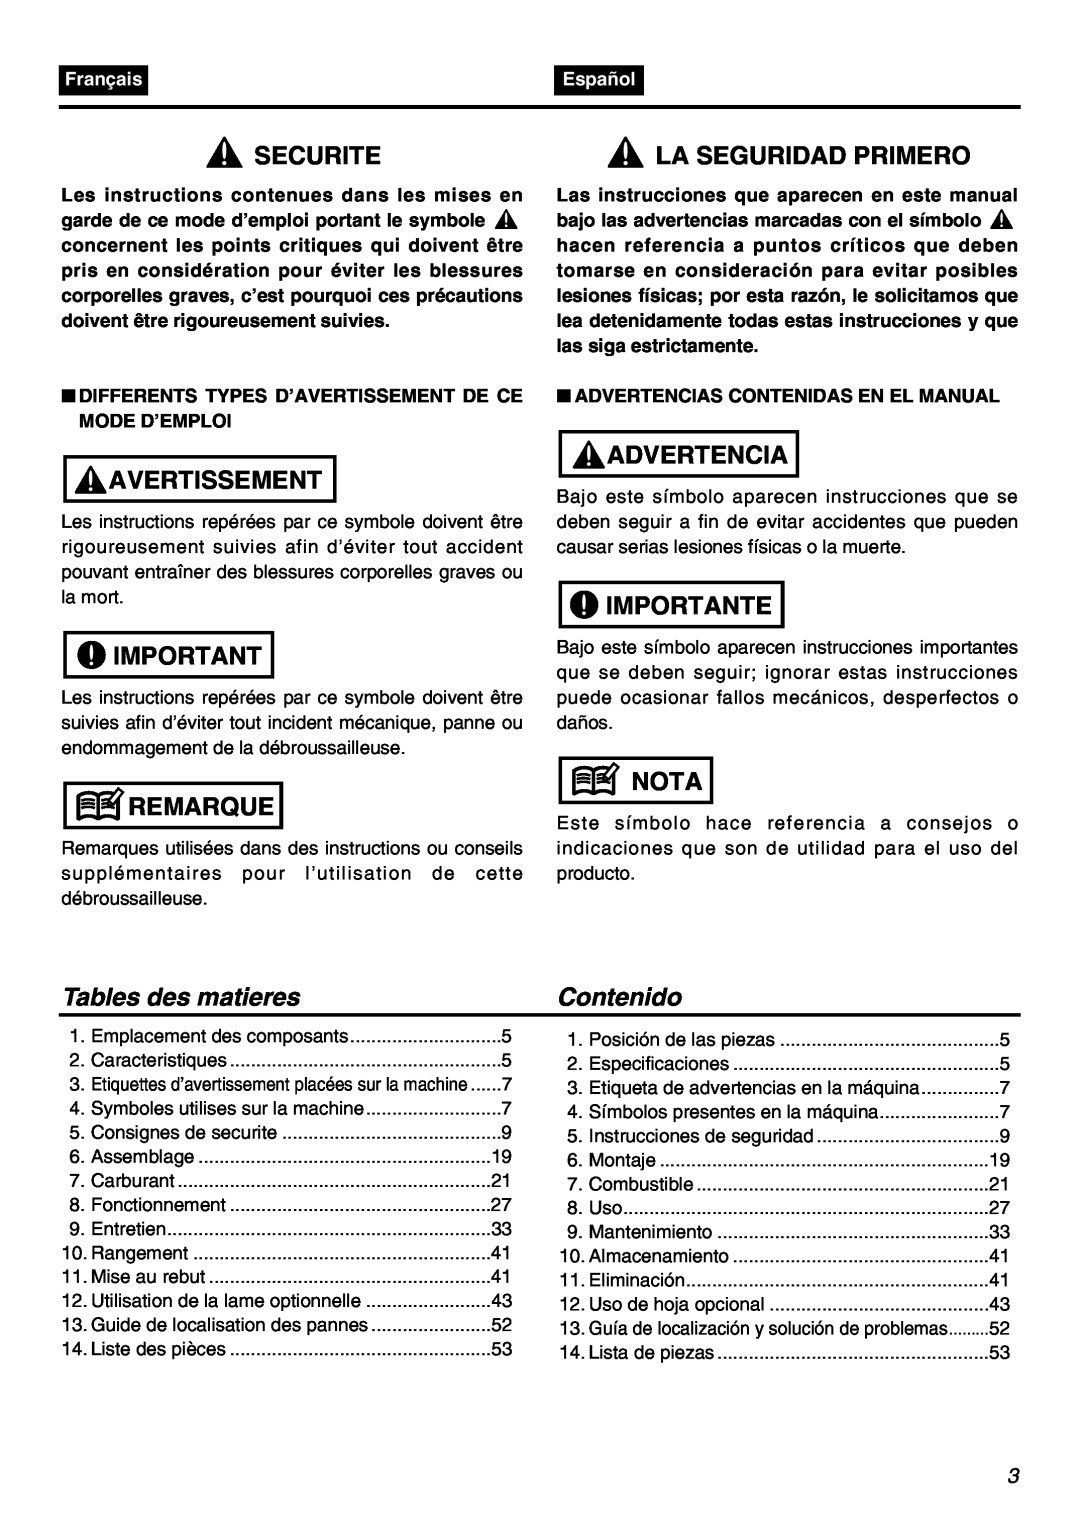 RedMax BCZ2401S-CA manual Securite, Avertissement, Remarque, Advertencia, Importante, Nota, Tables des matieres, Contenido 